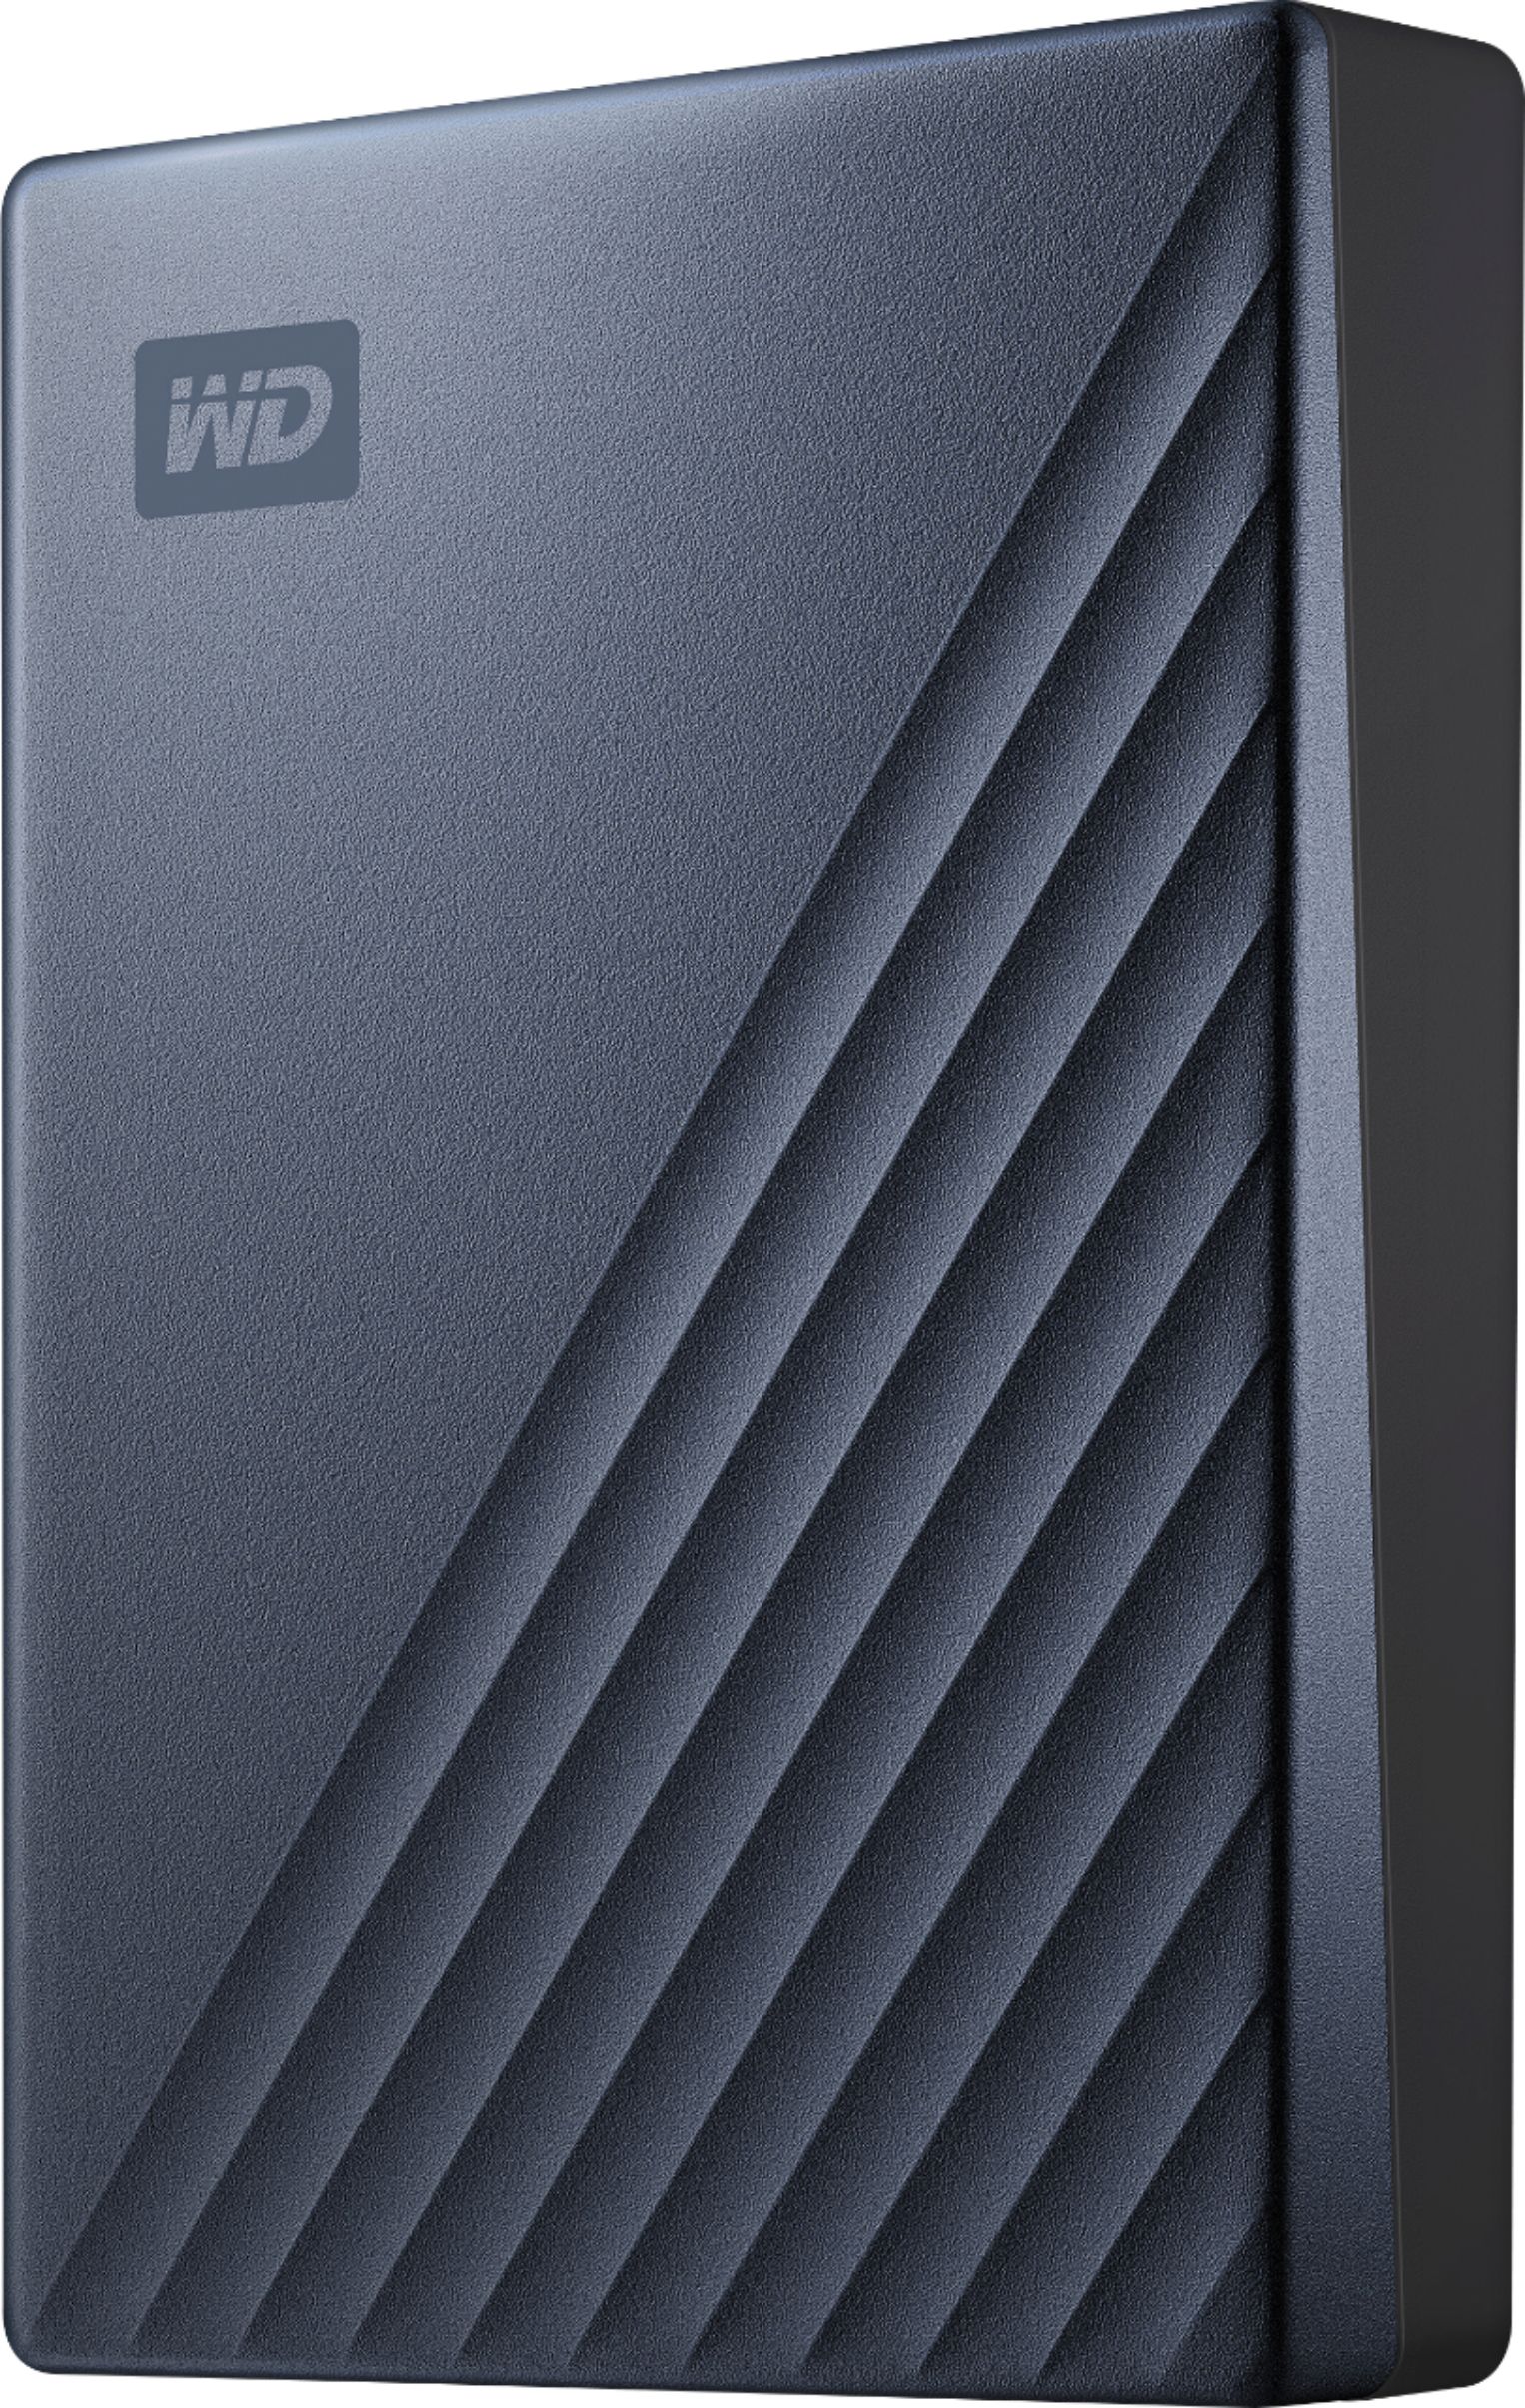 WD - My Passport Ultra 4TB External USB 3.0 Portable Hard Drive - Blue